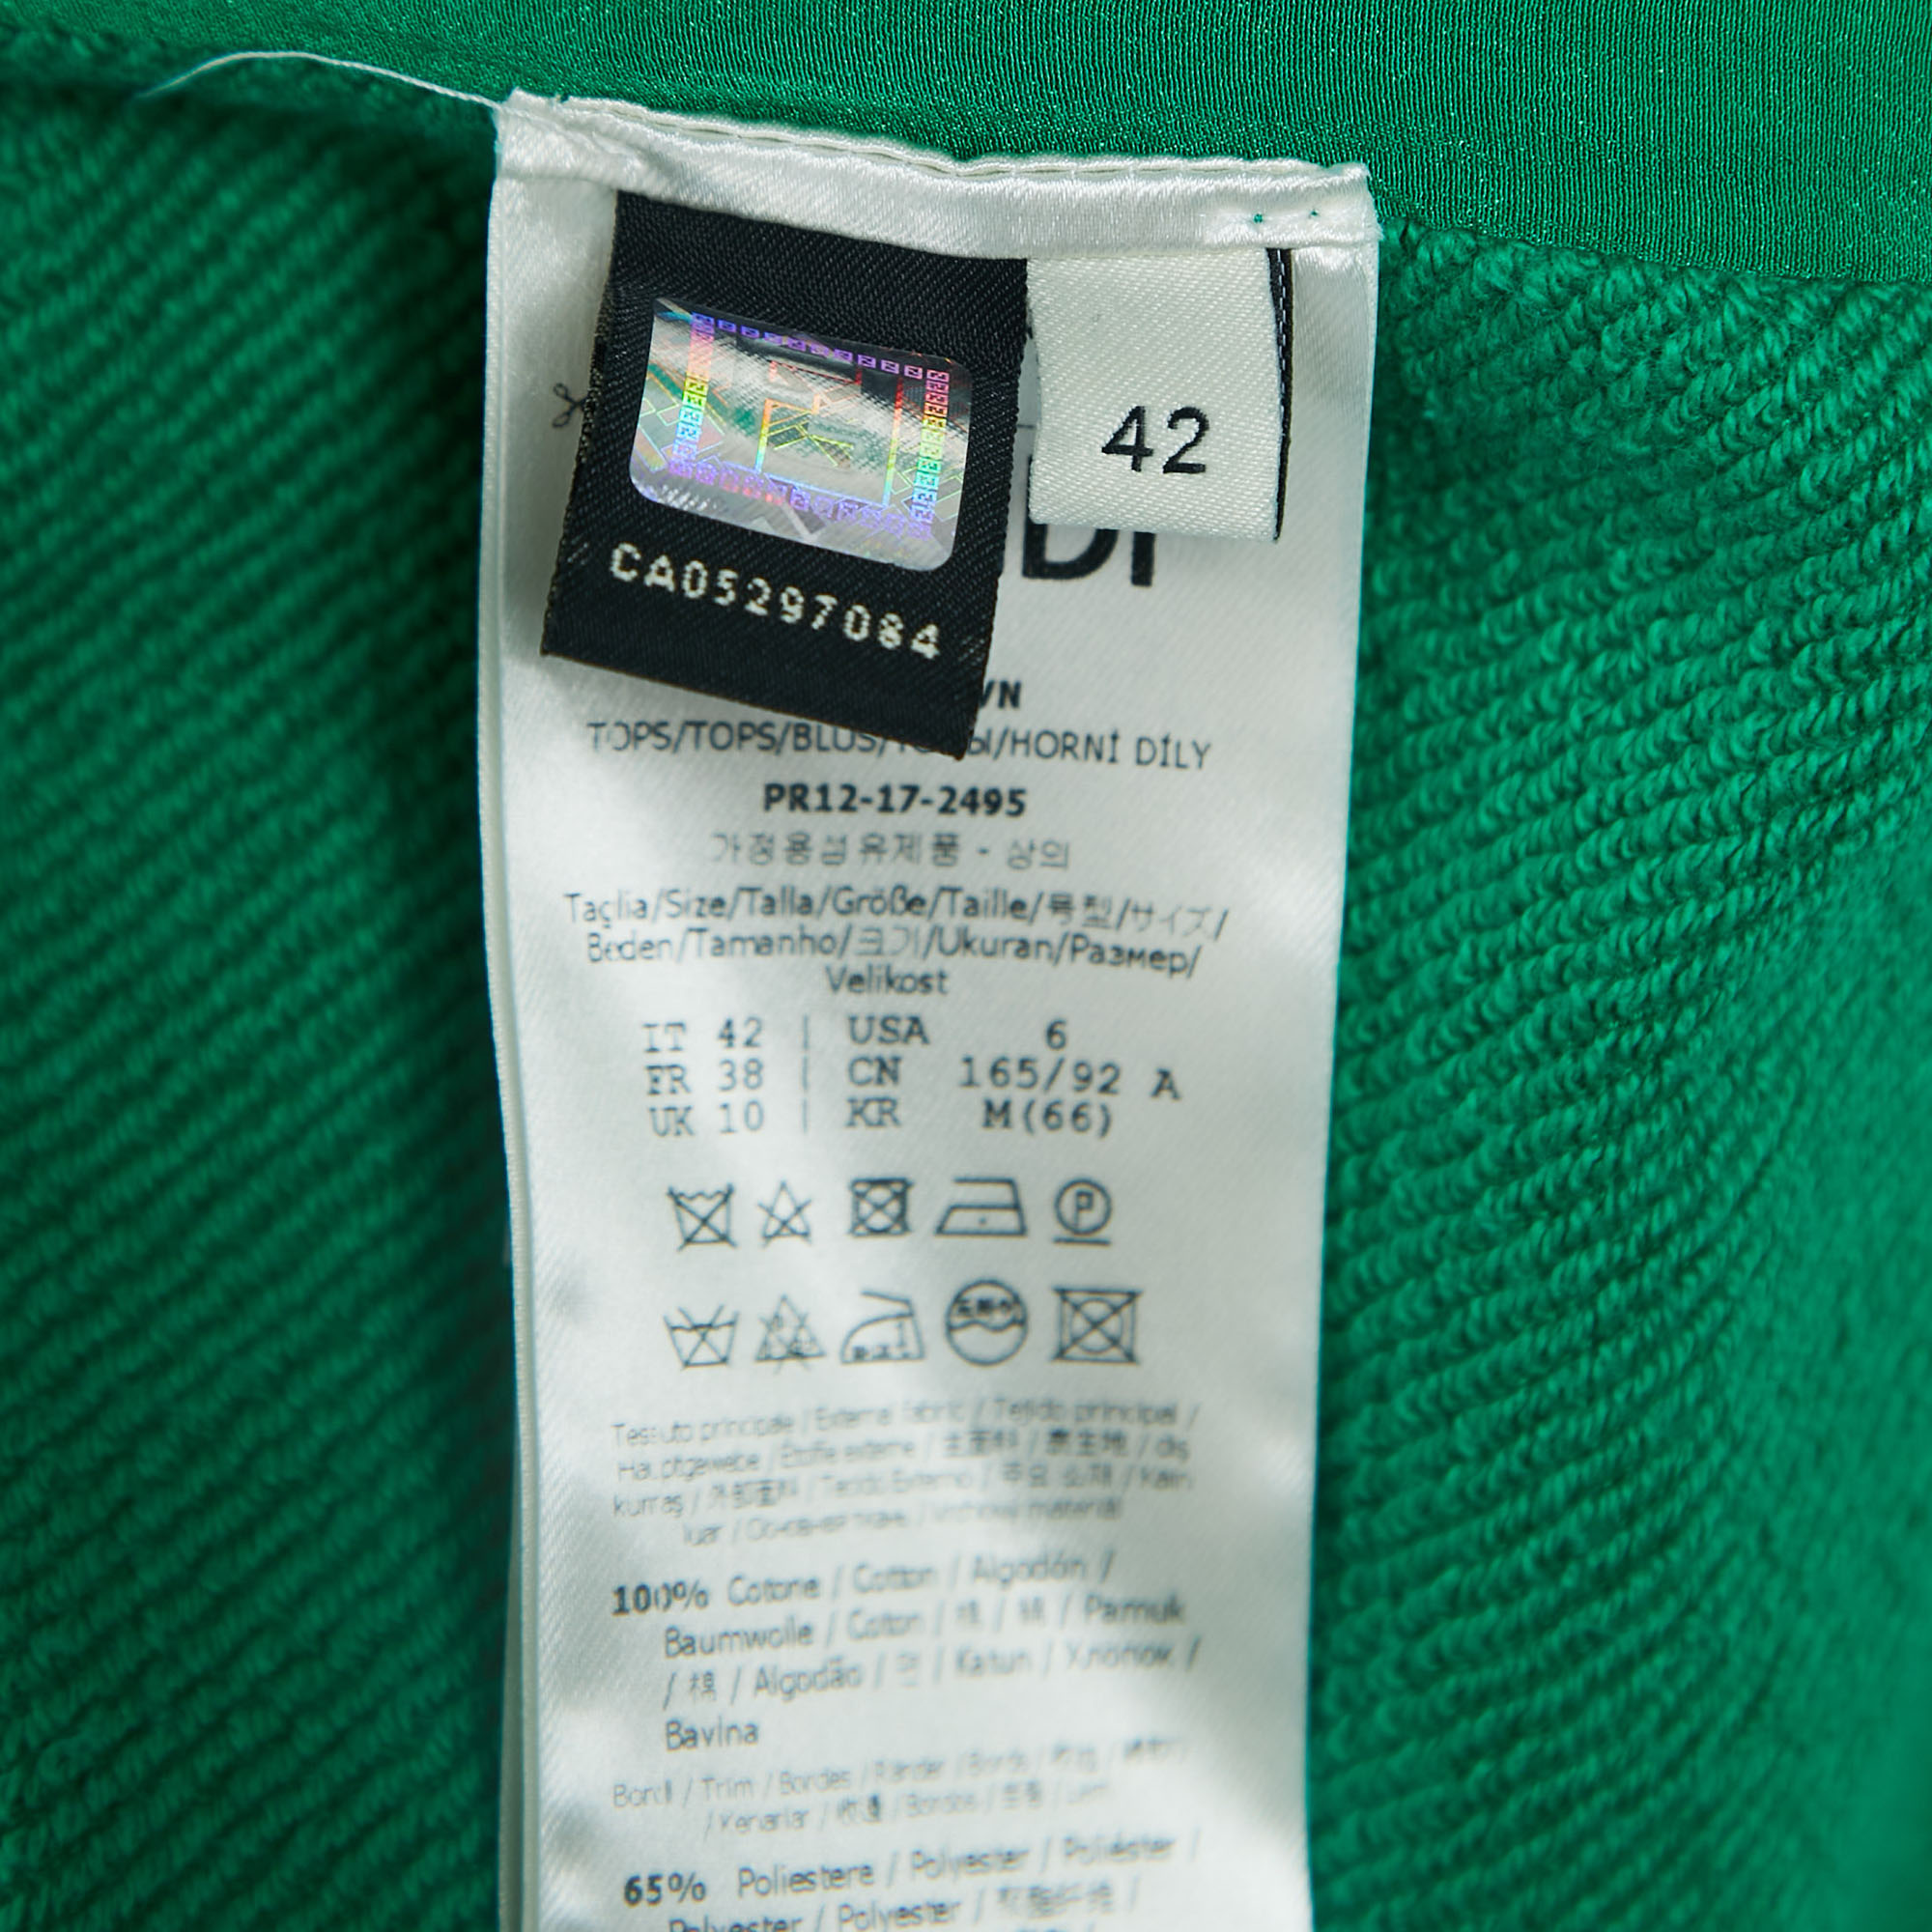 Fendi Green Logo Embellished Cotton Hooded Sweatshirt M